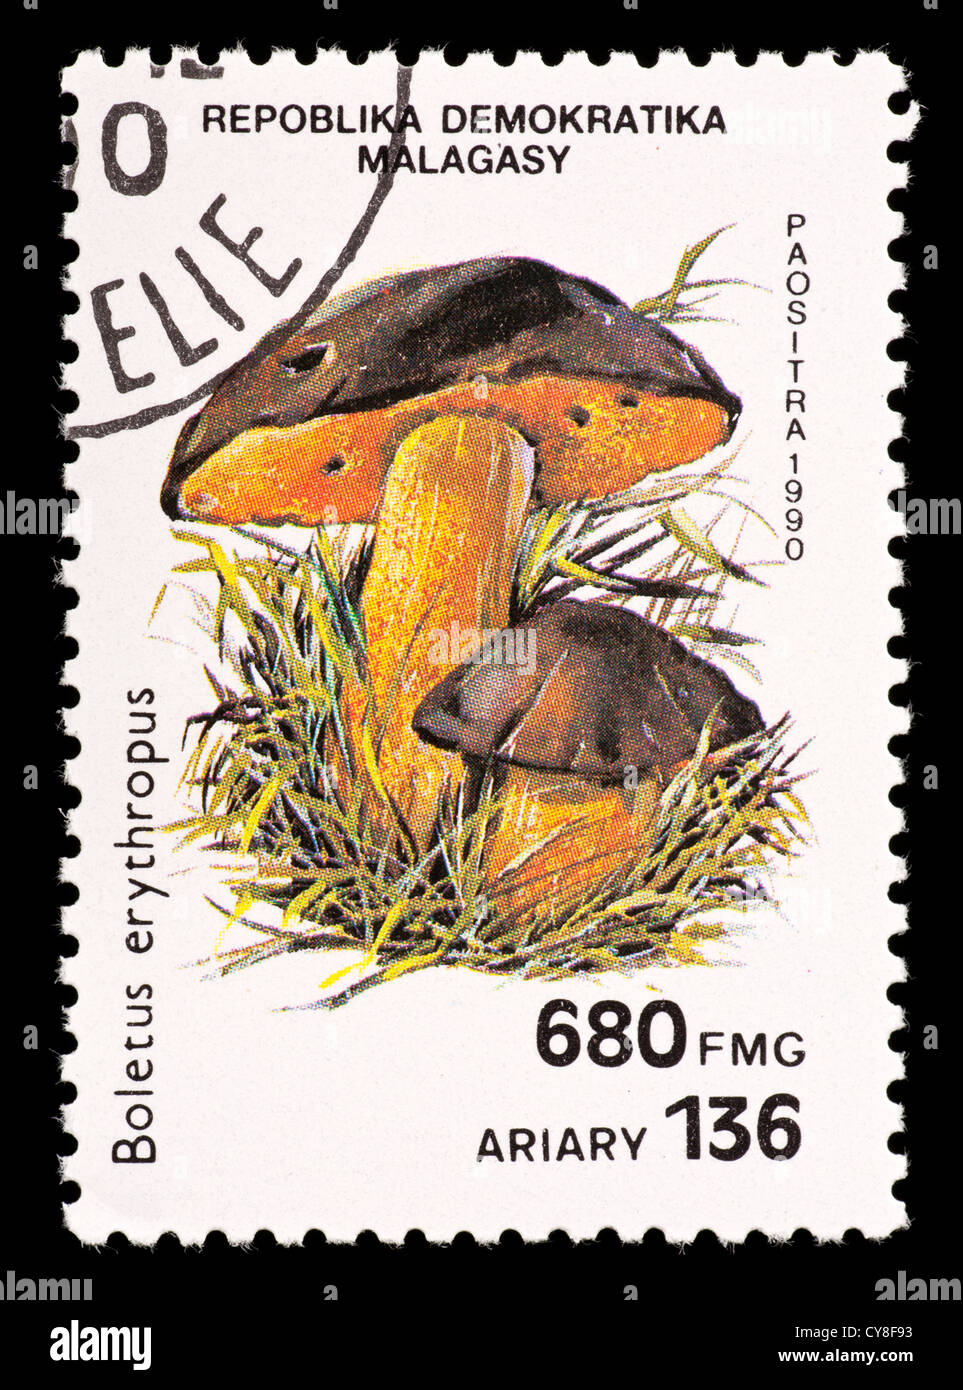 Postage stamp from Madagascar depicting mushrooms (Boletus erythropus) Stock Photo